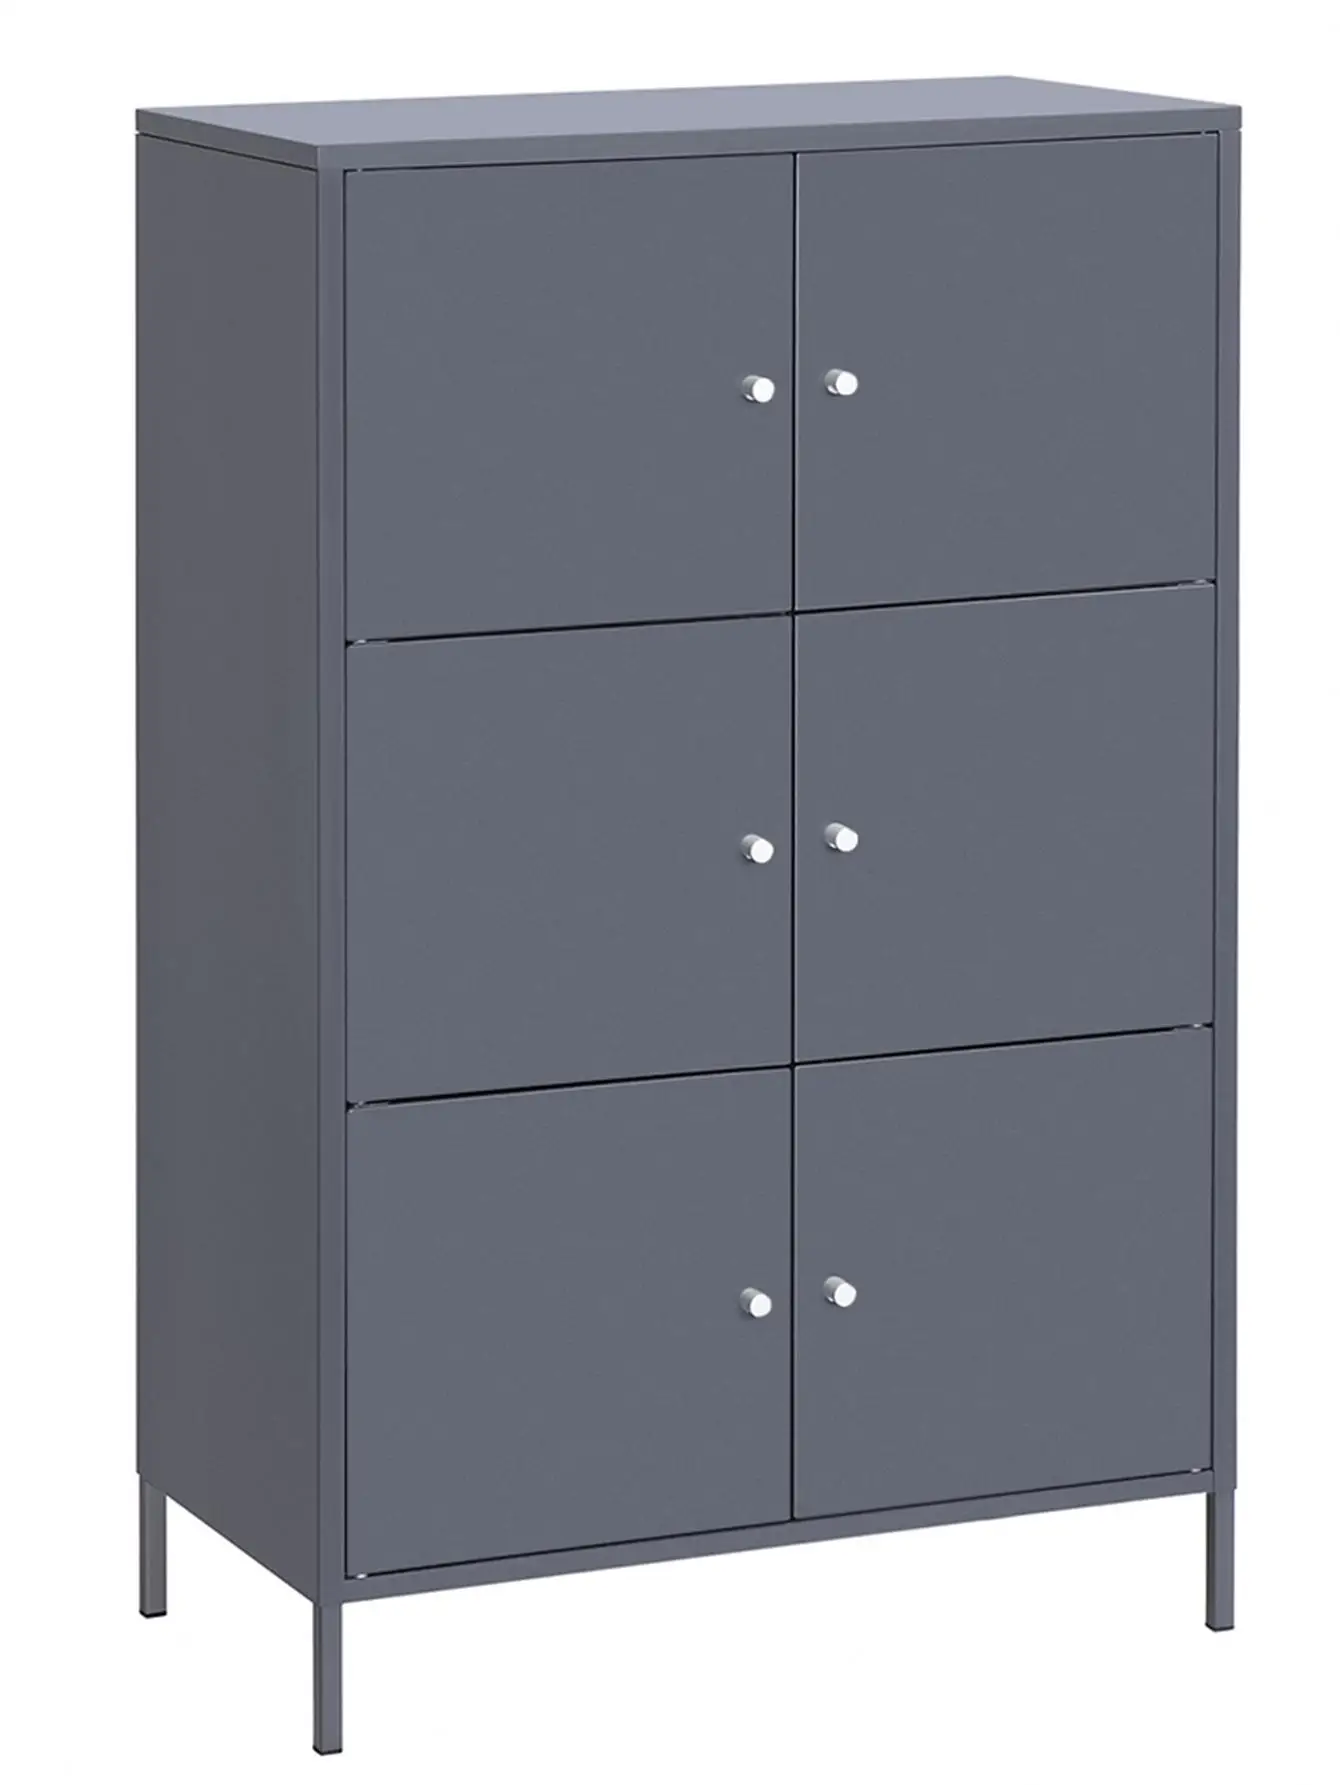 

Storage Cabinet, 3-Tier Metal Office Cabinet, Multipurpose Storage Organiser Stand with 6 Doors